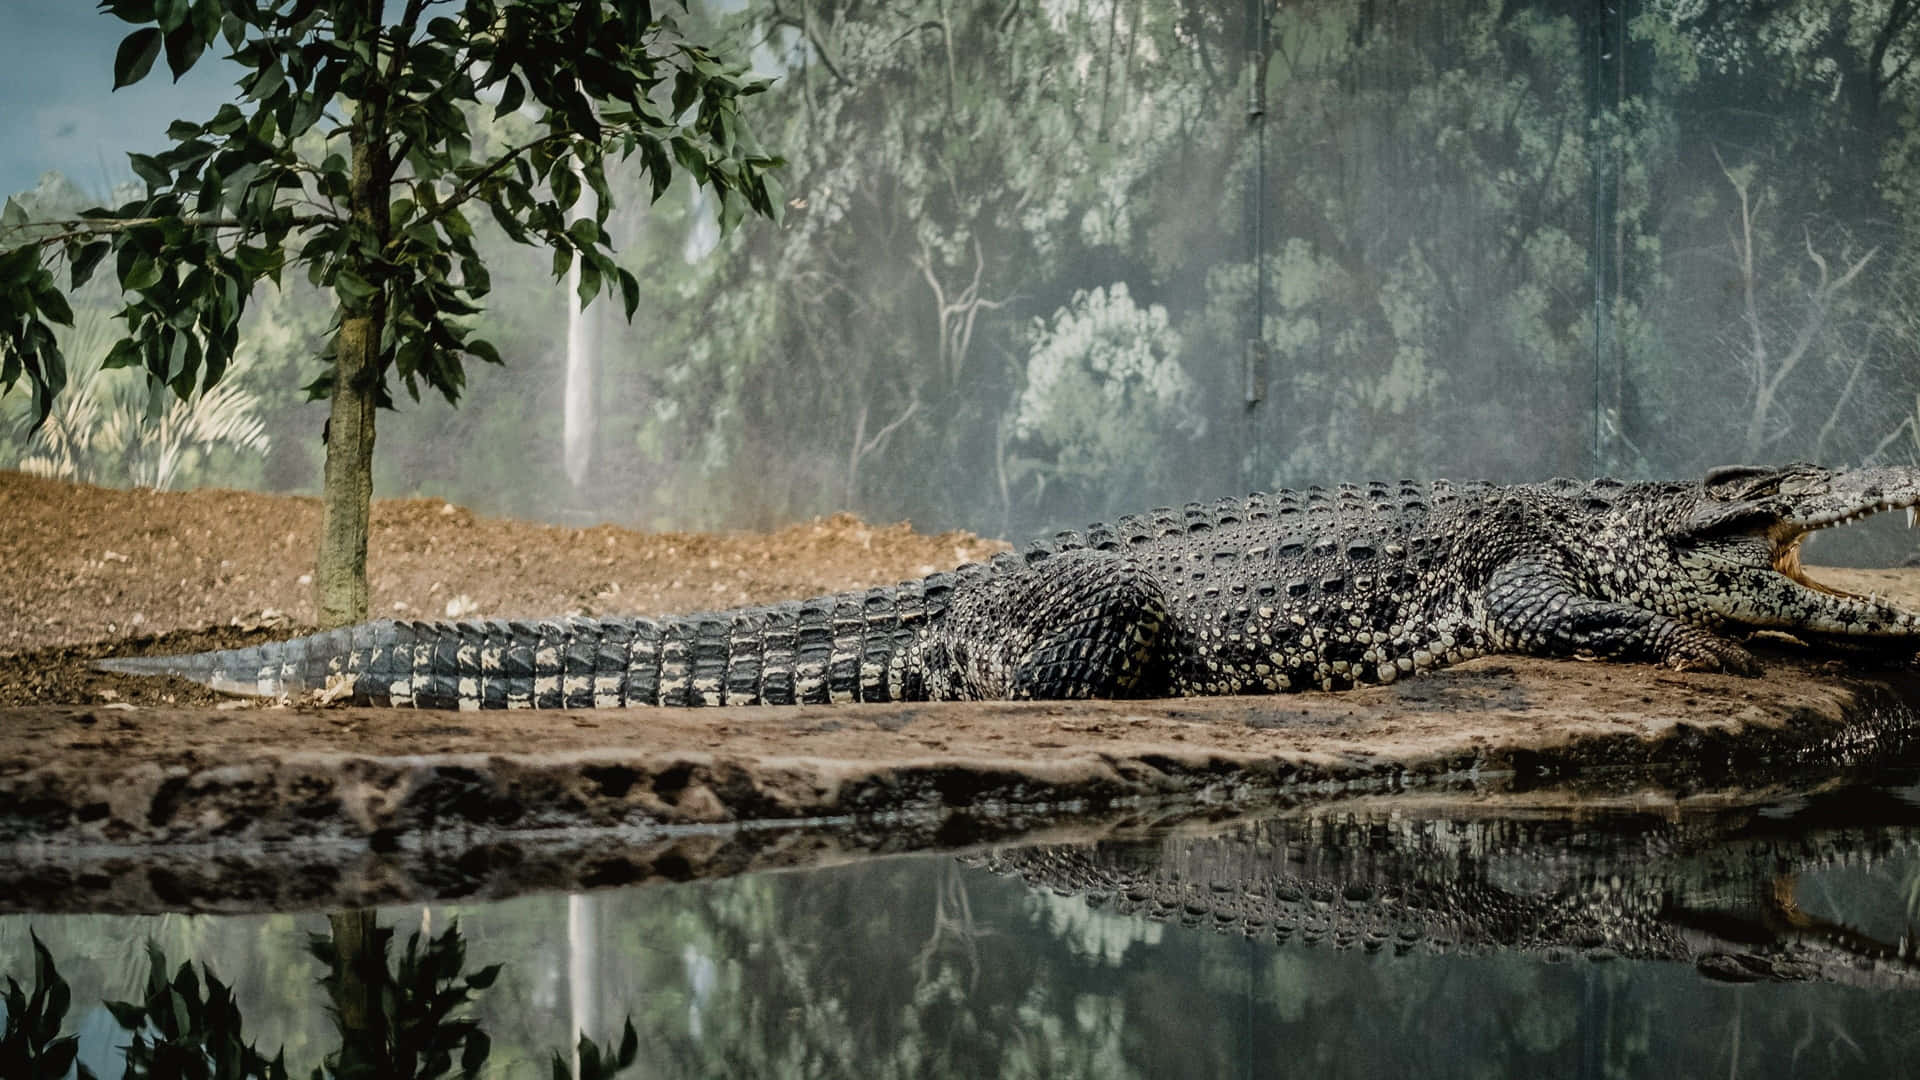 Big Long Dark Crocodile Picture